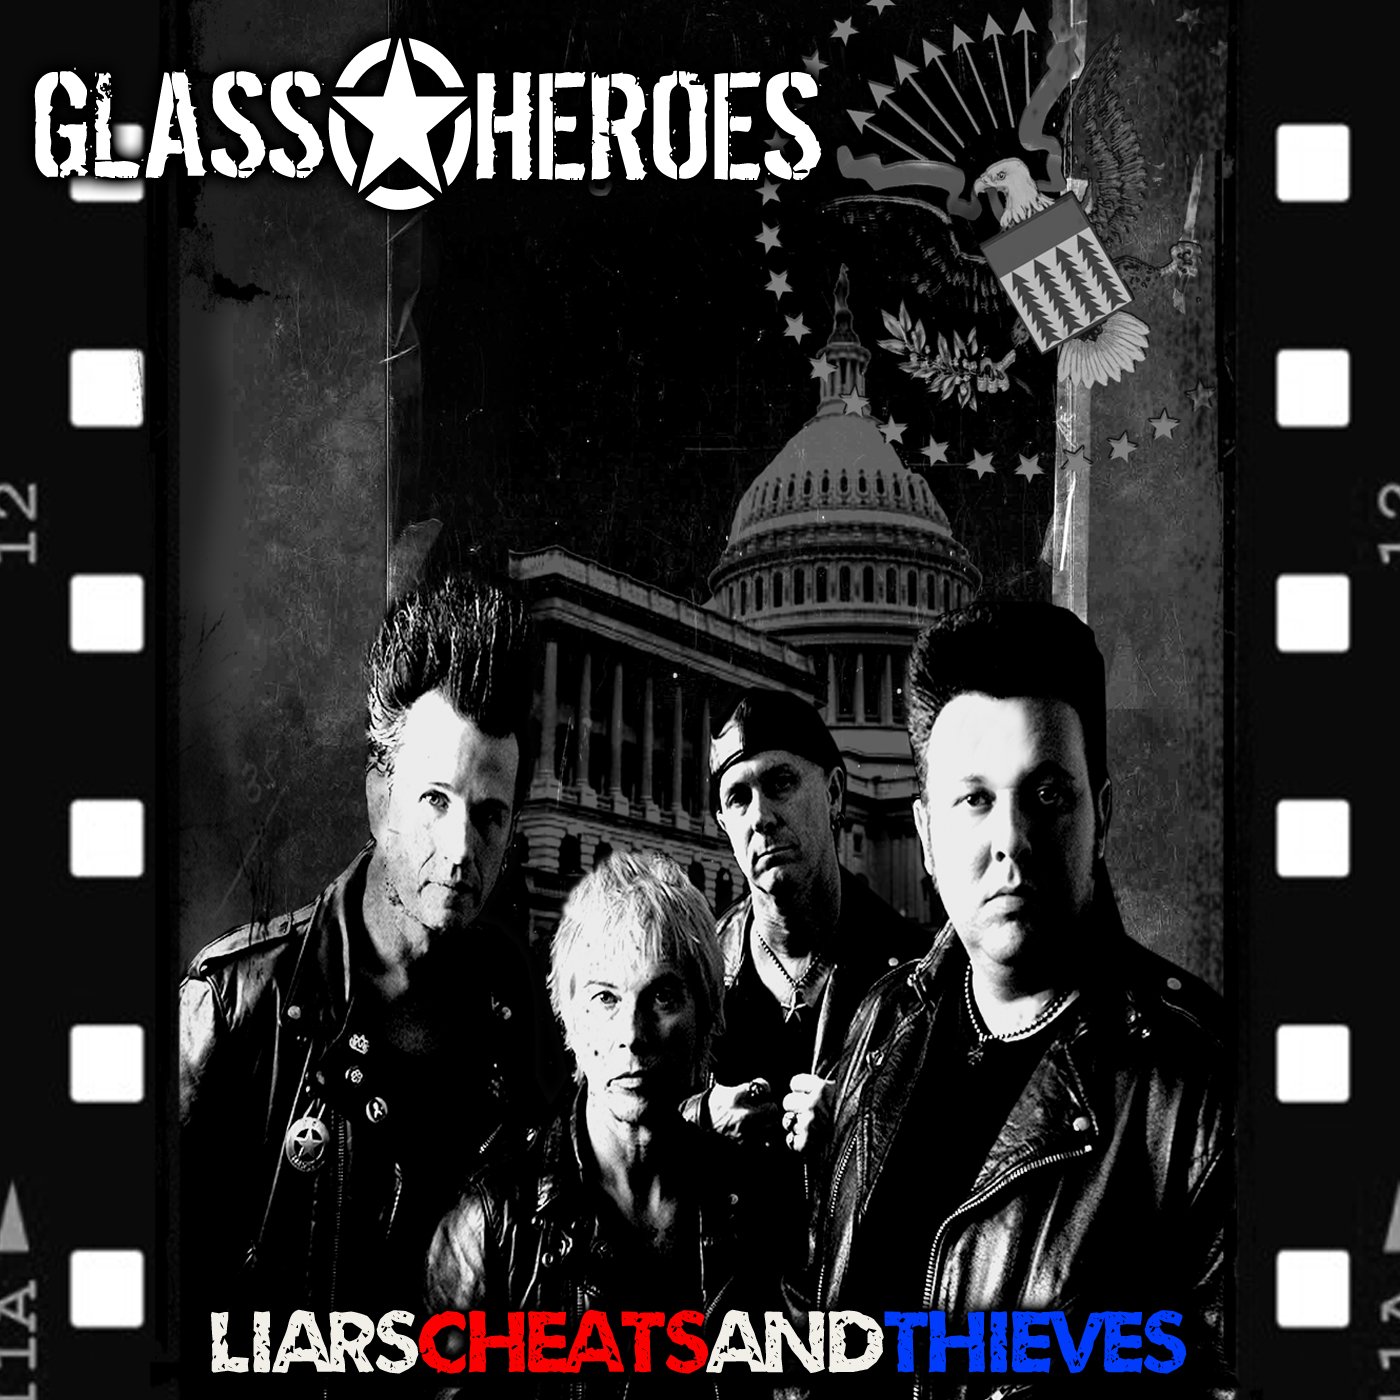 Glass heroes